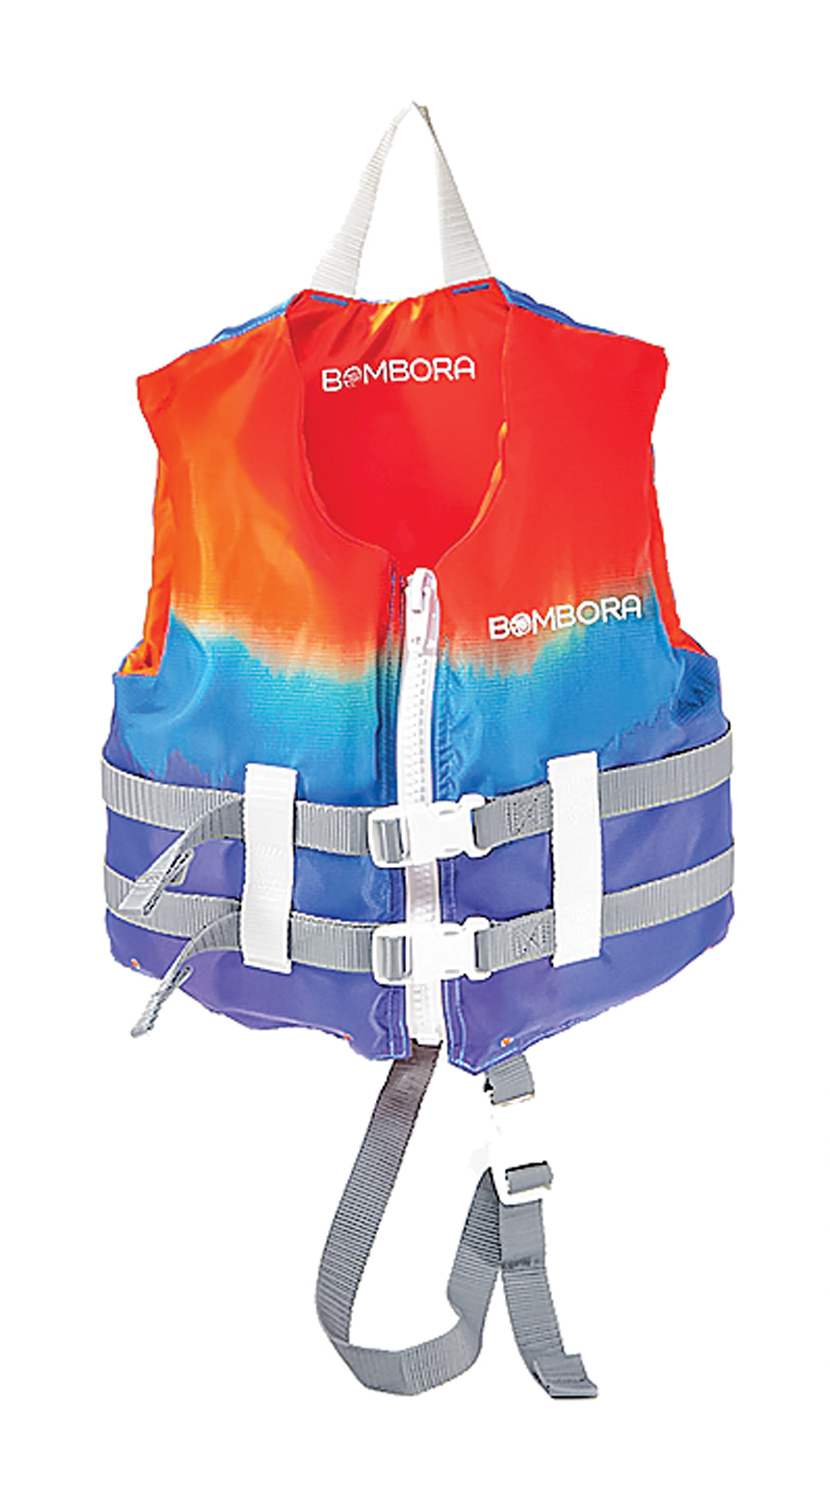 Bombora's colorful life jacket for kids